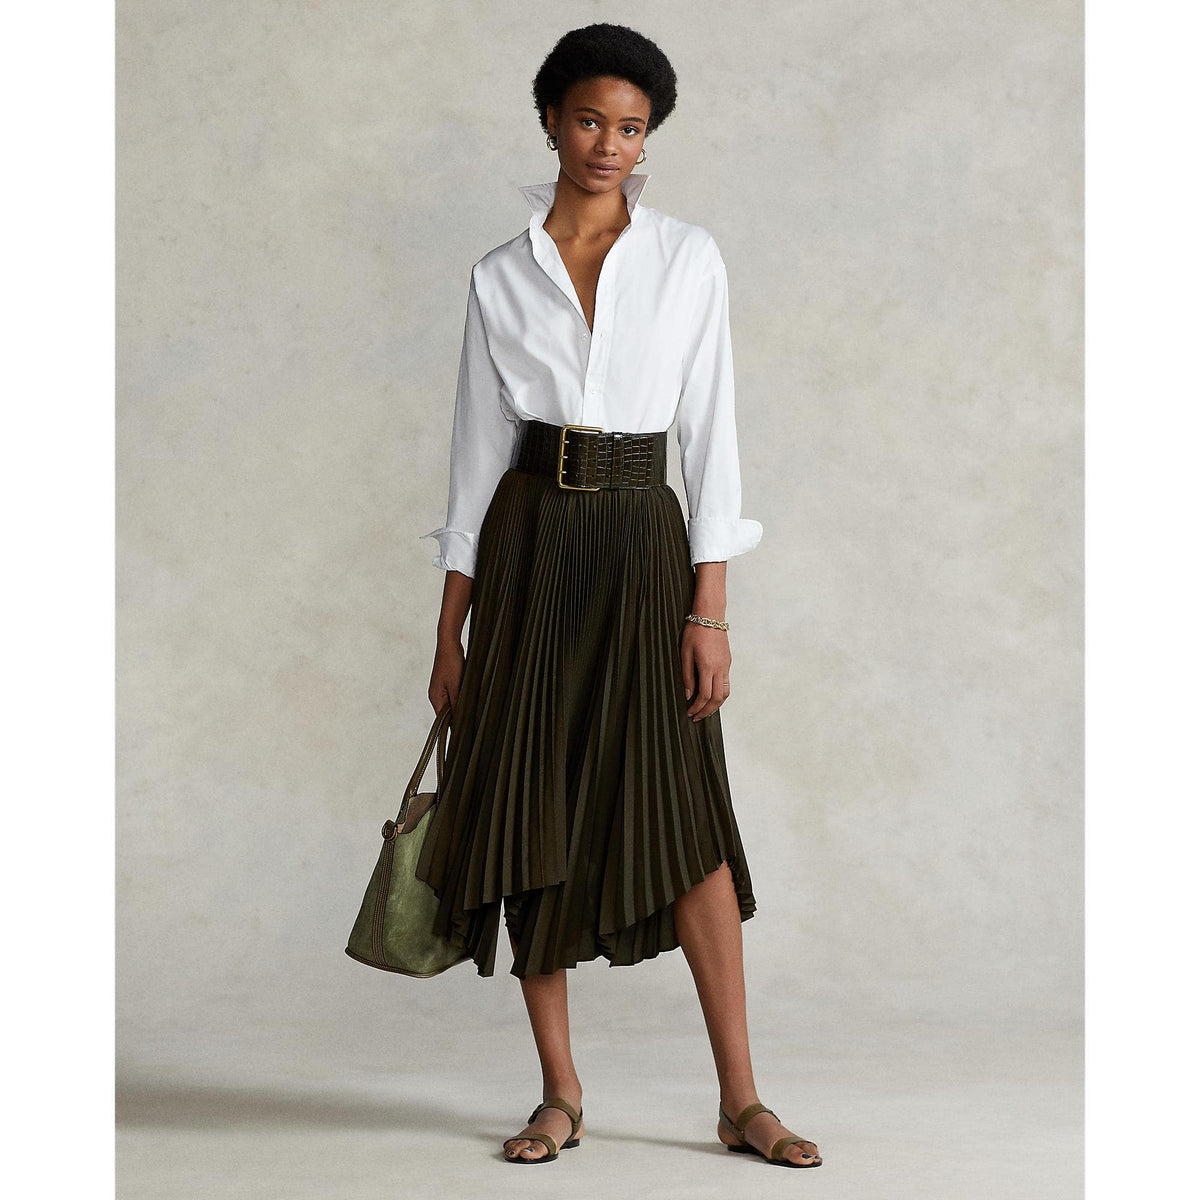 Buy online Breezy Georgette Handkerchief Skirt from Skirts